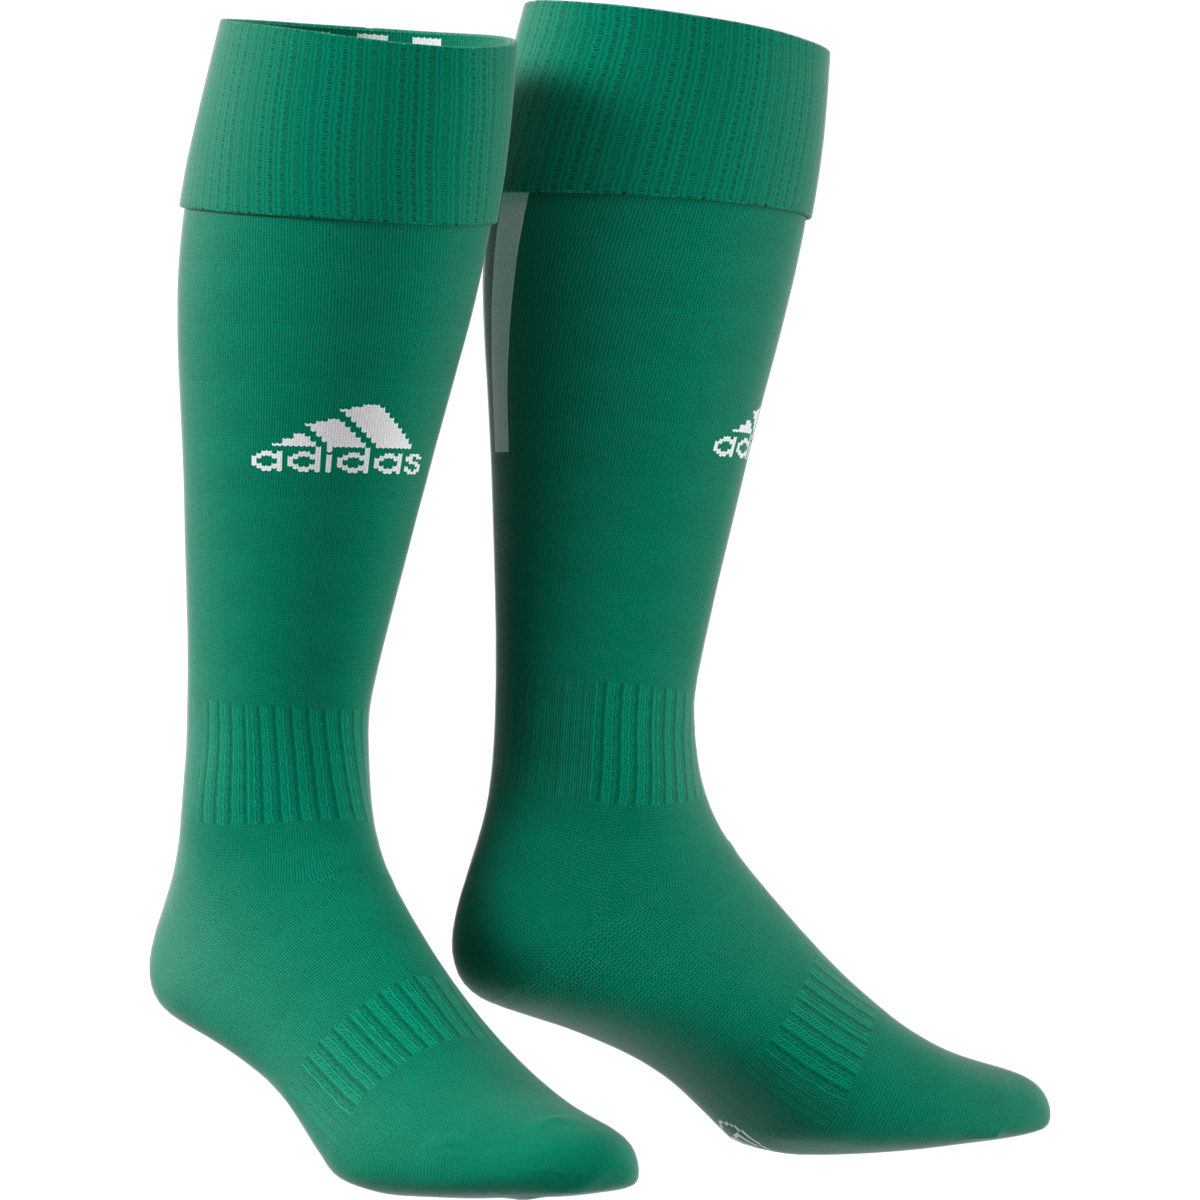 Adidas Santos 18 zelená/bílá EU 31/33